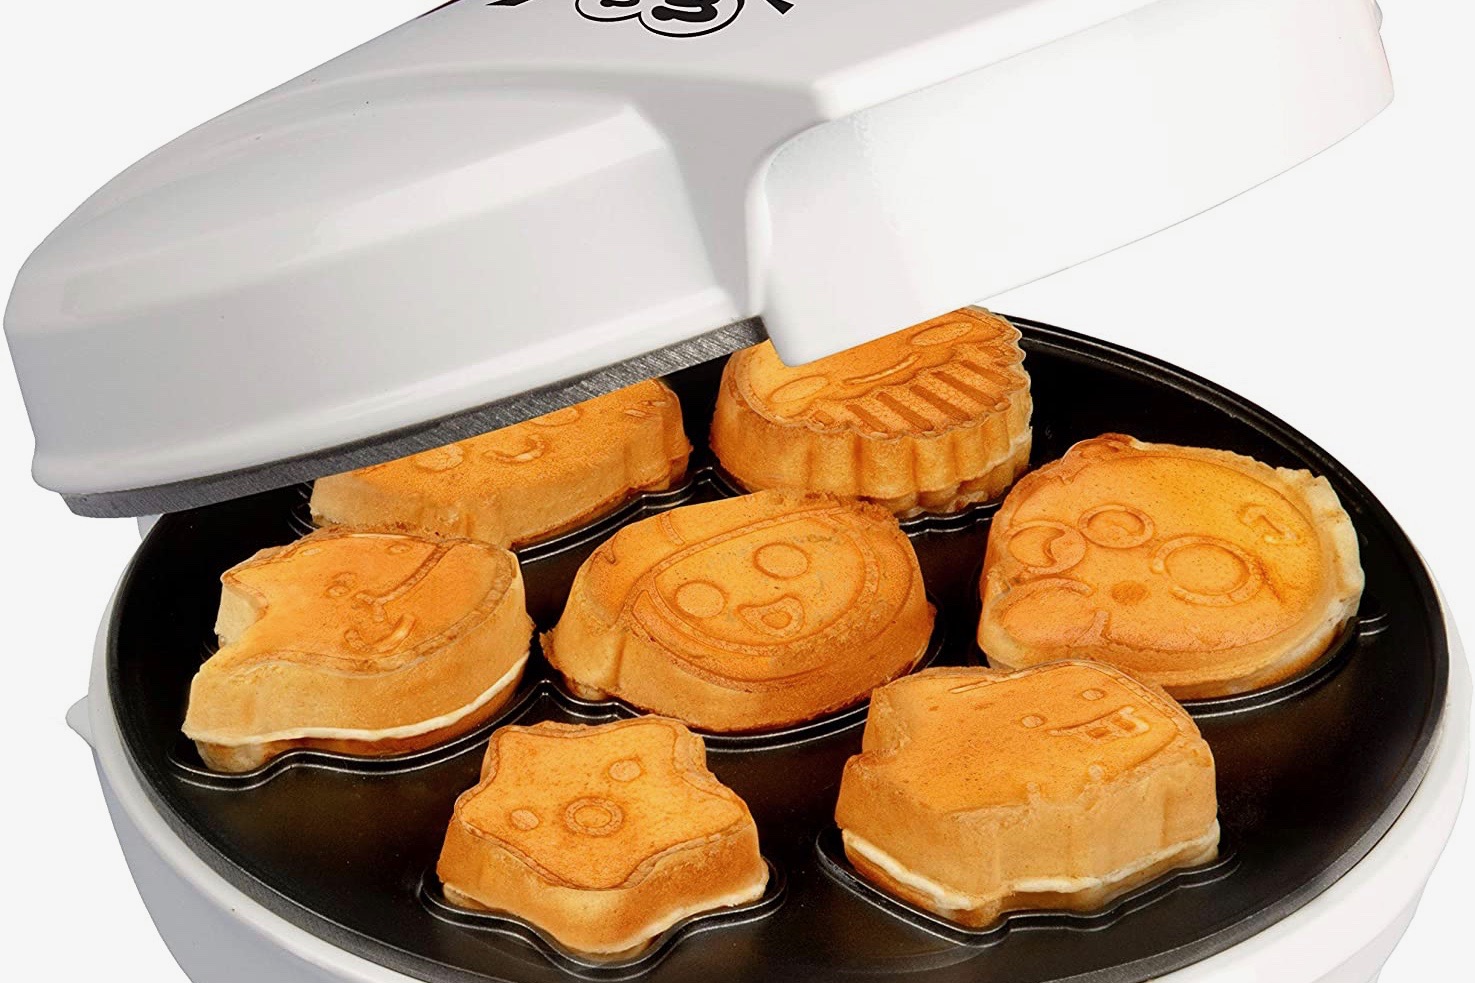 https://www.digitaltrends.com/wp-content/uploads//2020/11/sea-creature-waffle-maker-best-irons-1.jpg?fit=500%2C334&p=1